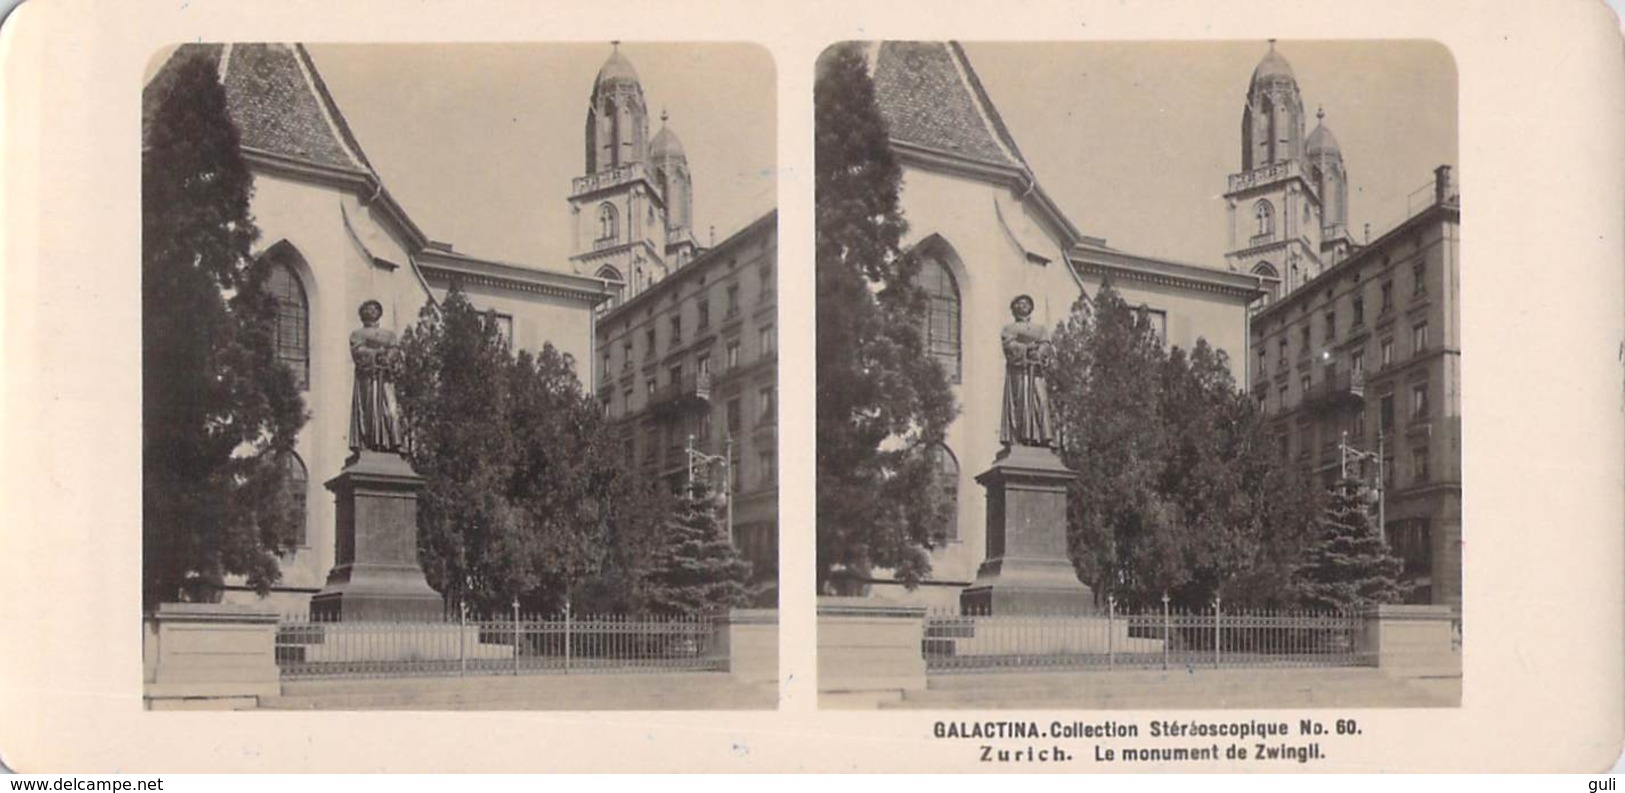 Collection Stéréoscopique GALACTINA N°60/ZURICH Le Monument Zwingli -photos Stéréoscopiques NPG 1906 - Photos Stéréoscopiques